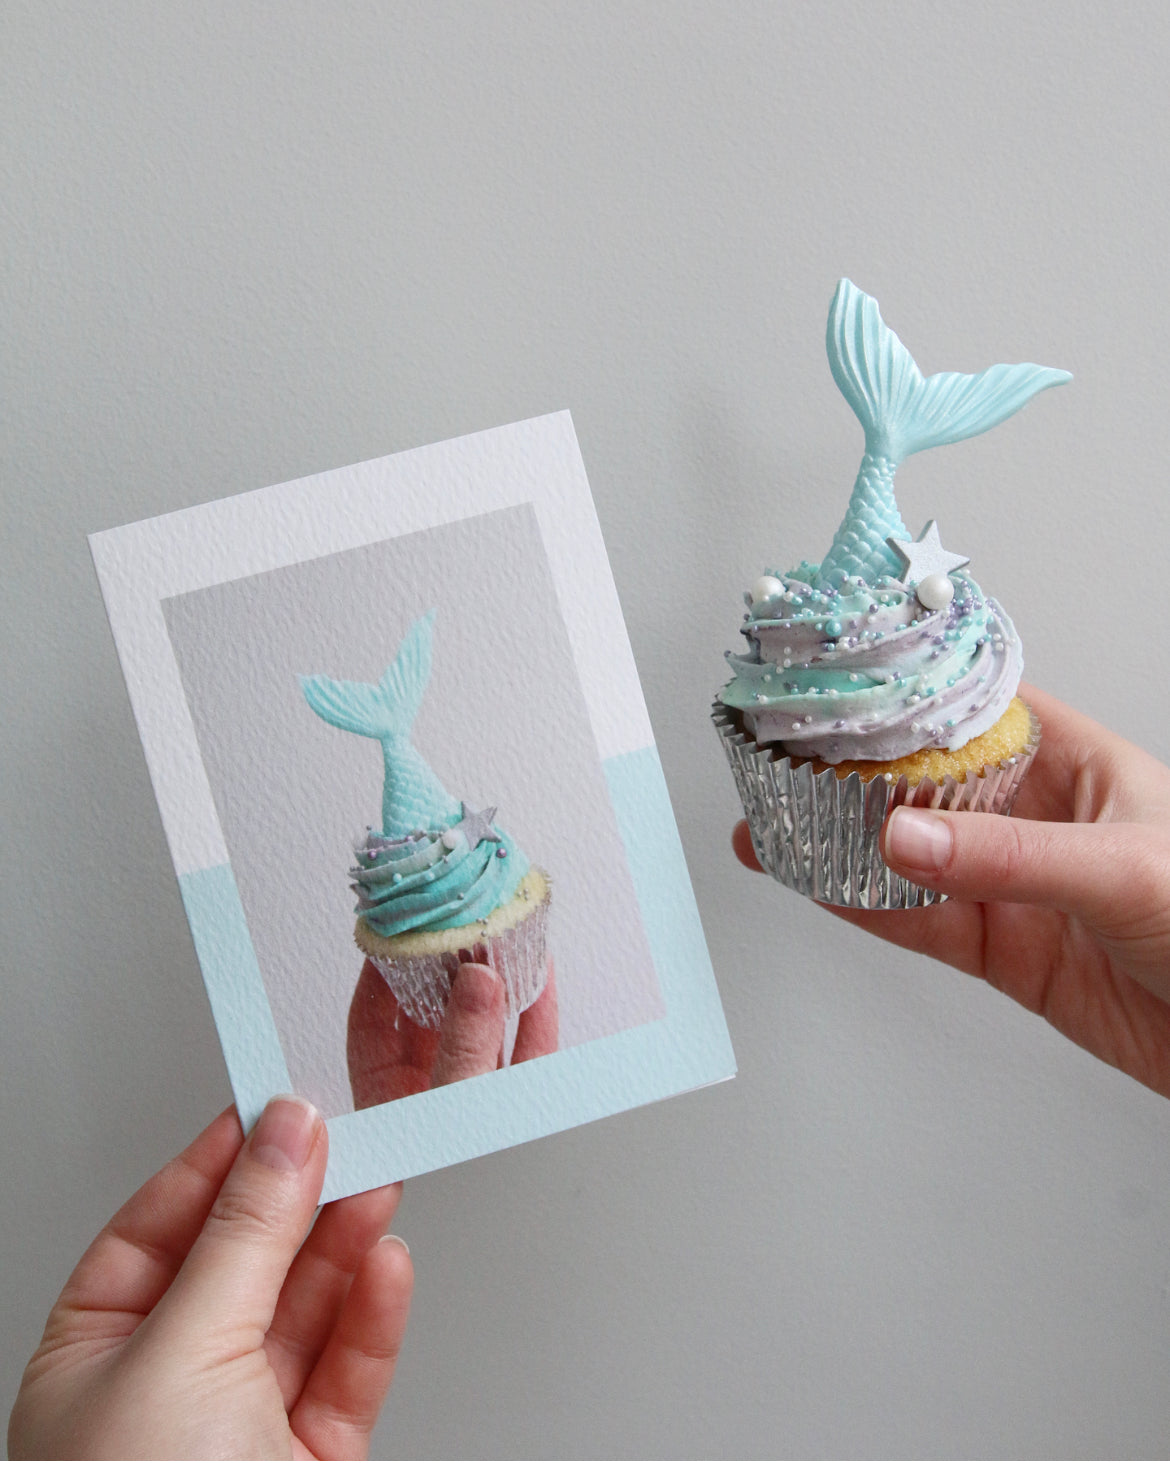 Holding Mermaid Cupcake Photo Card and Cupcake